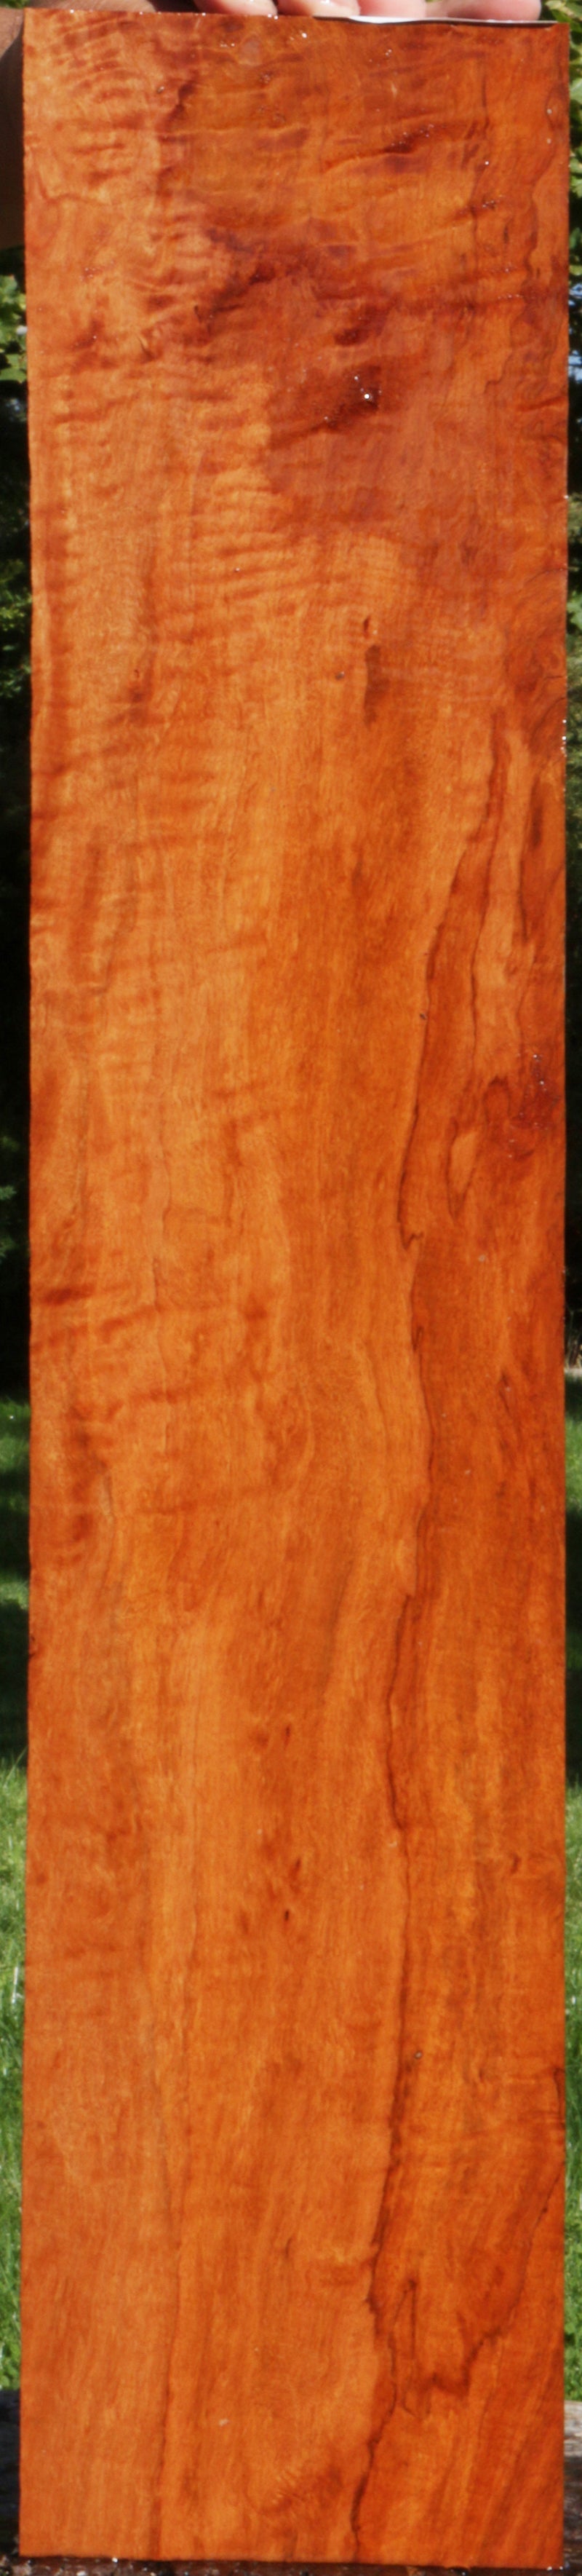 Extra Fancy Figured Rambutan Lumber